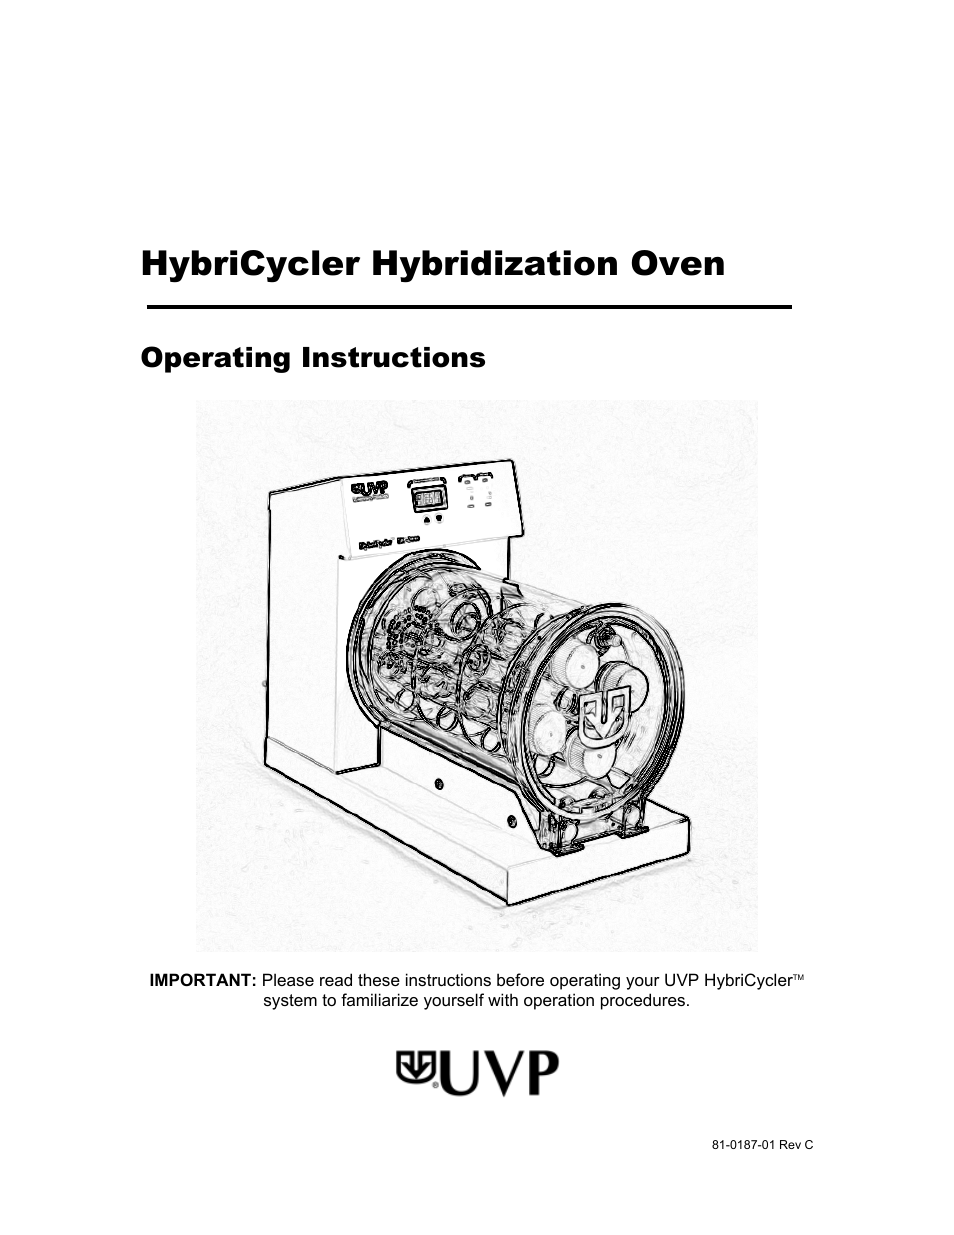 HybriCycler